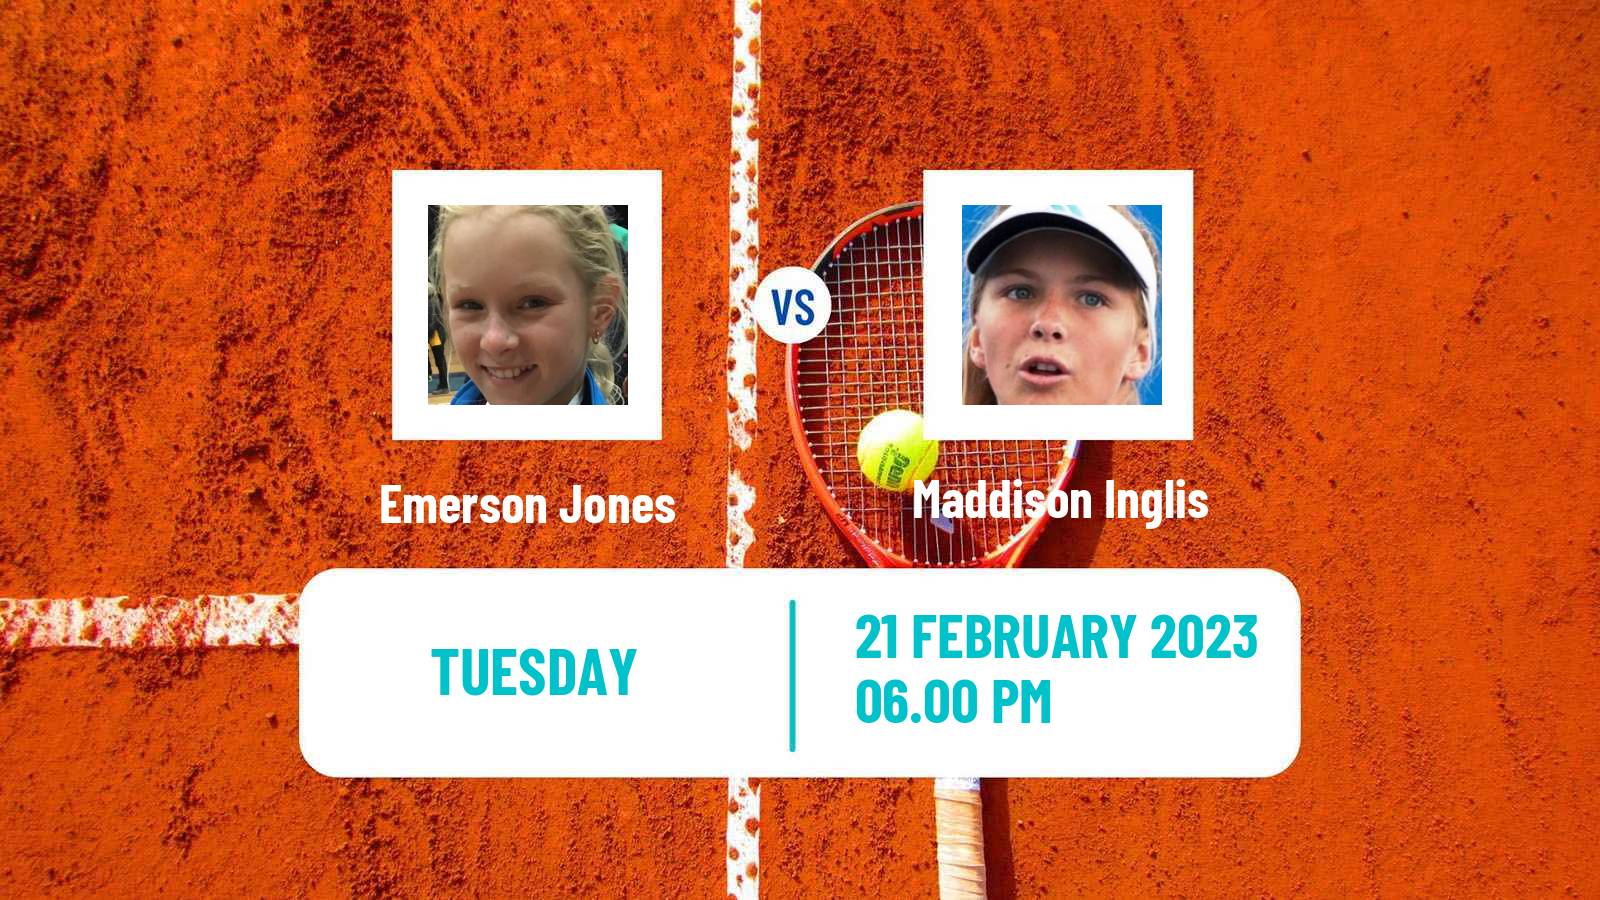 Tennis ITF Tournaments Emerson Jones - Maddison Inglis